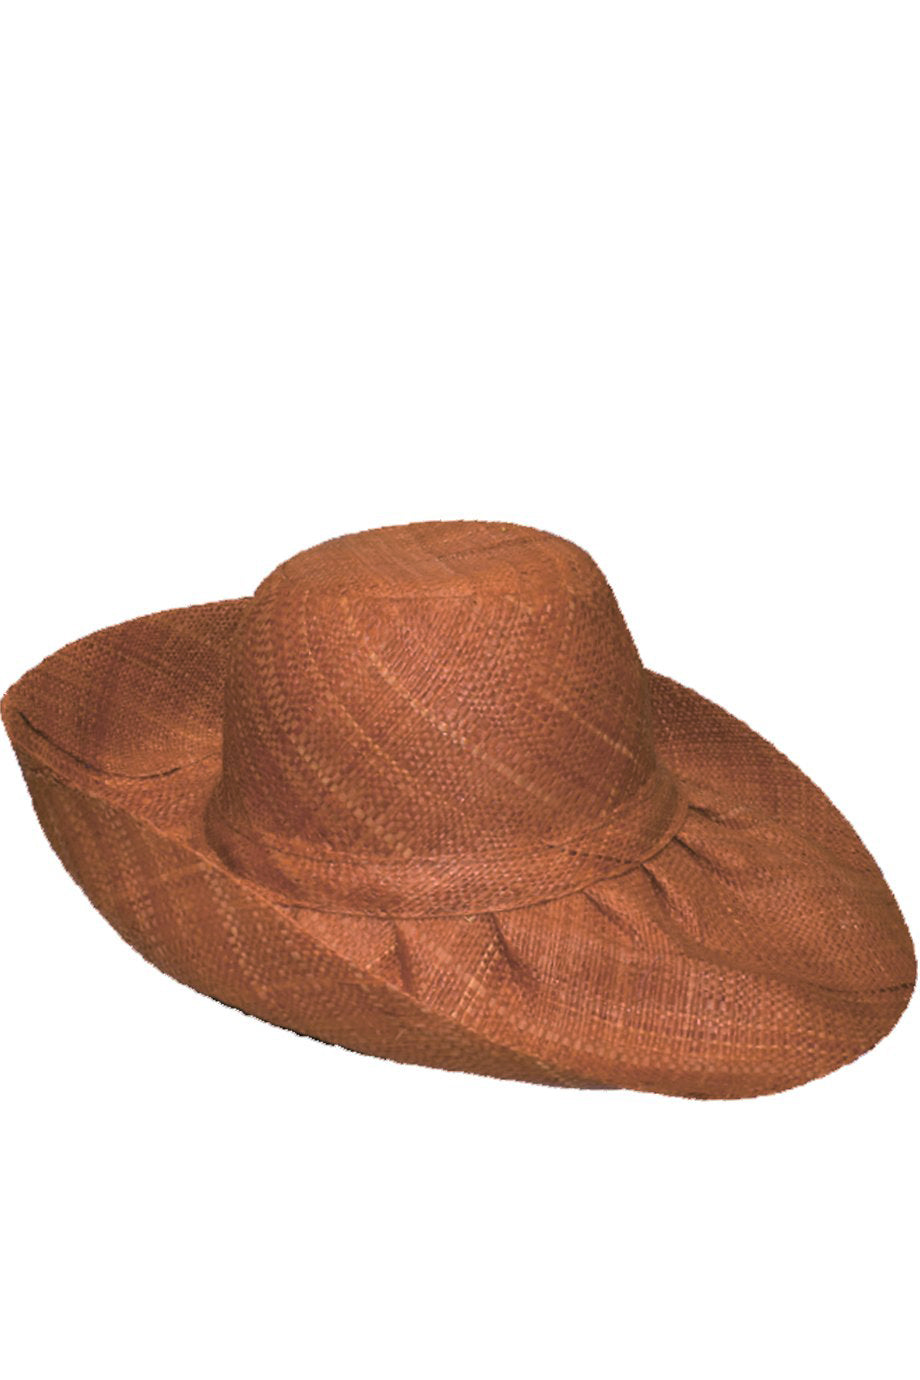 Kenzie Handmade Wide Madagascar Hat in Light Brown